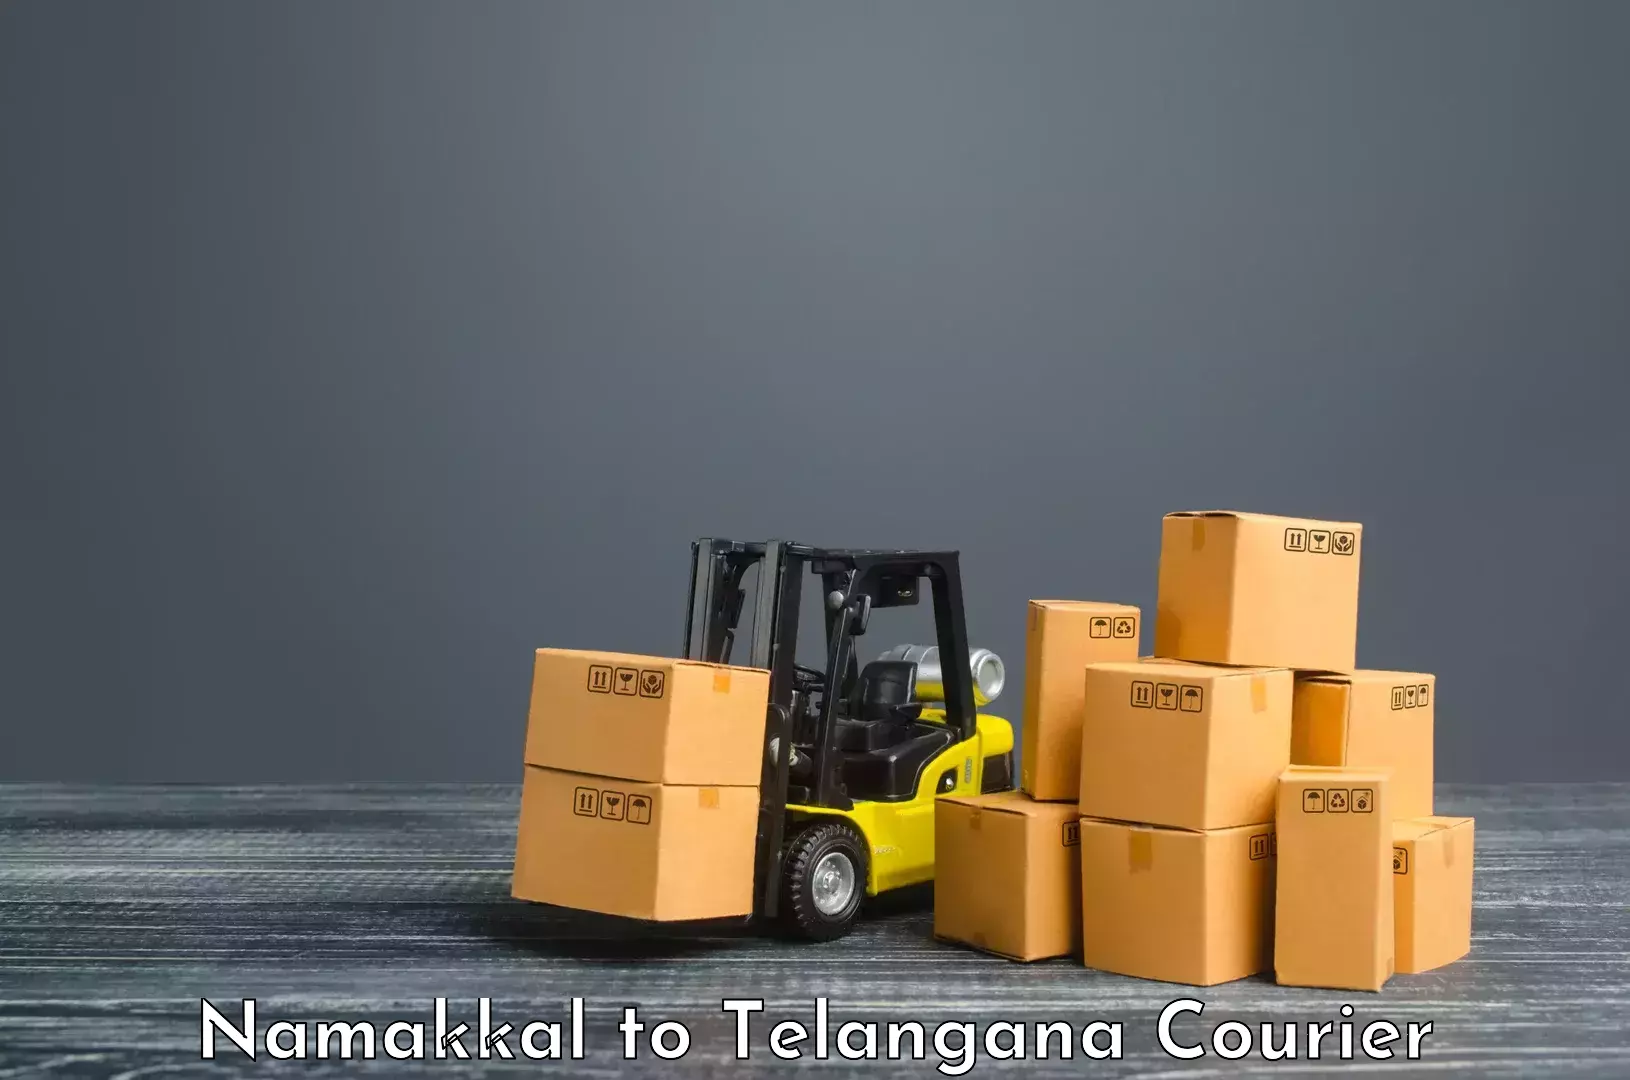 Express delivery network Namakkal to Raikal